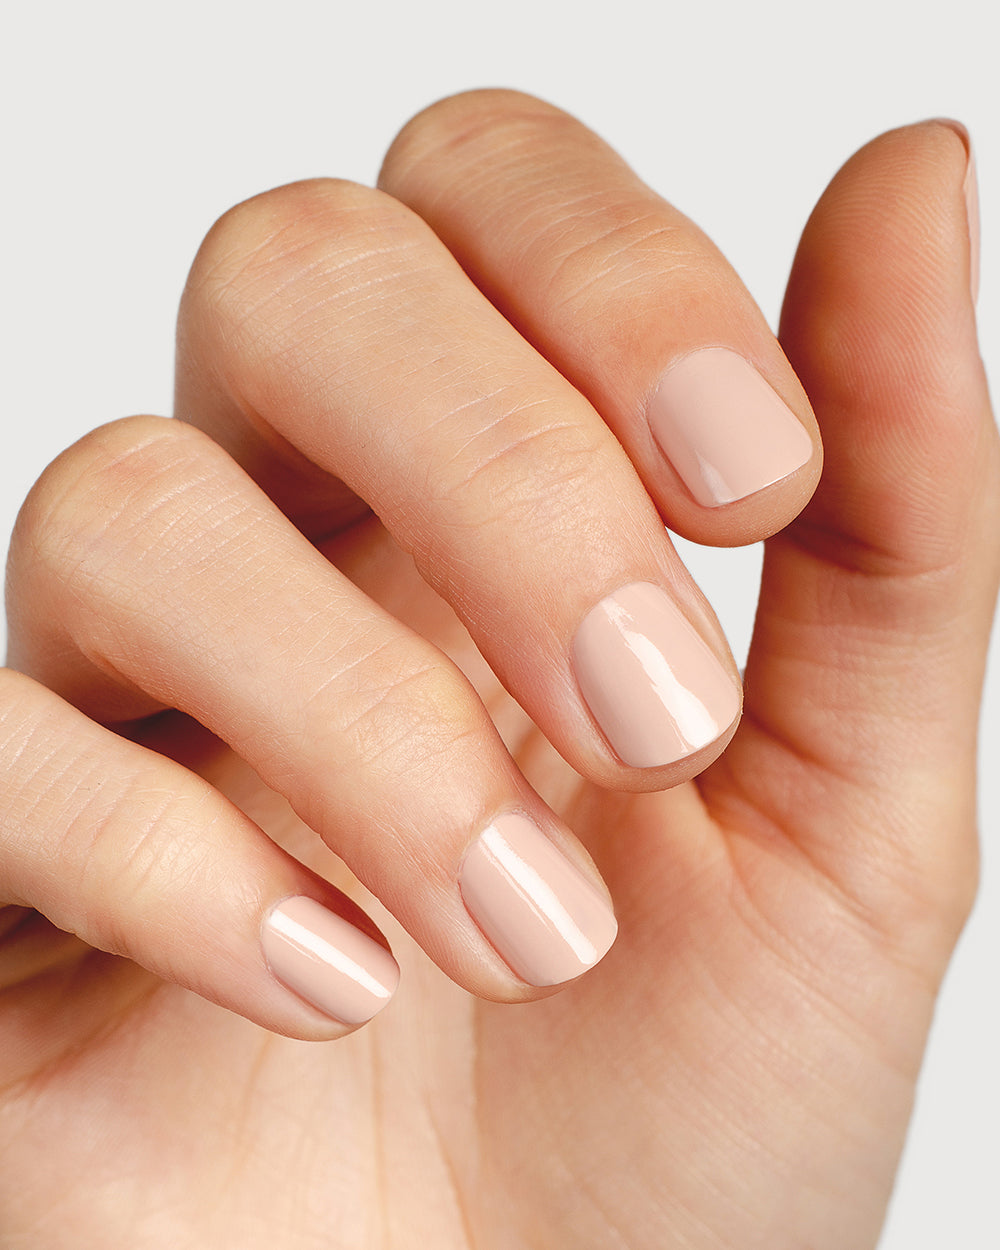 Soft neutral-pink nail polish hand swatch on fair skin tone up-close